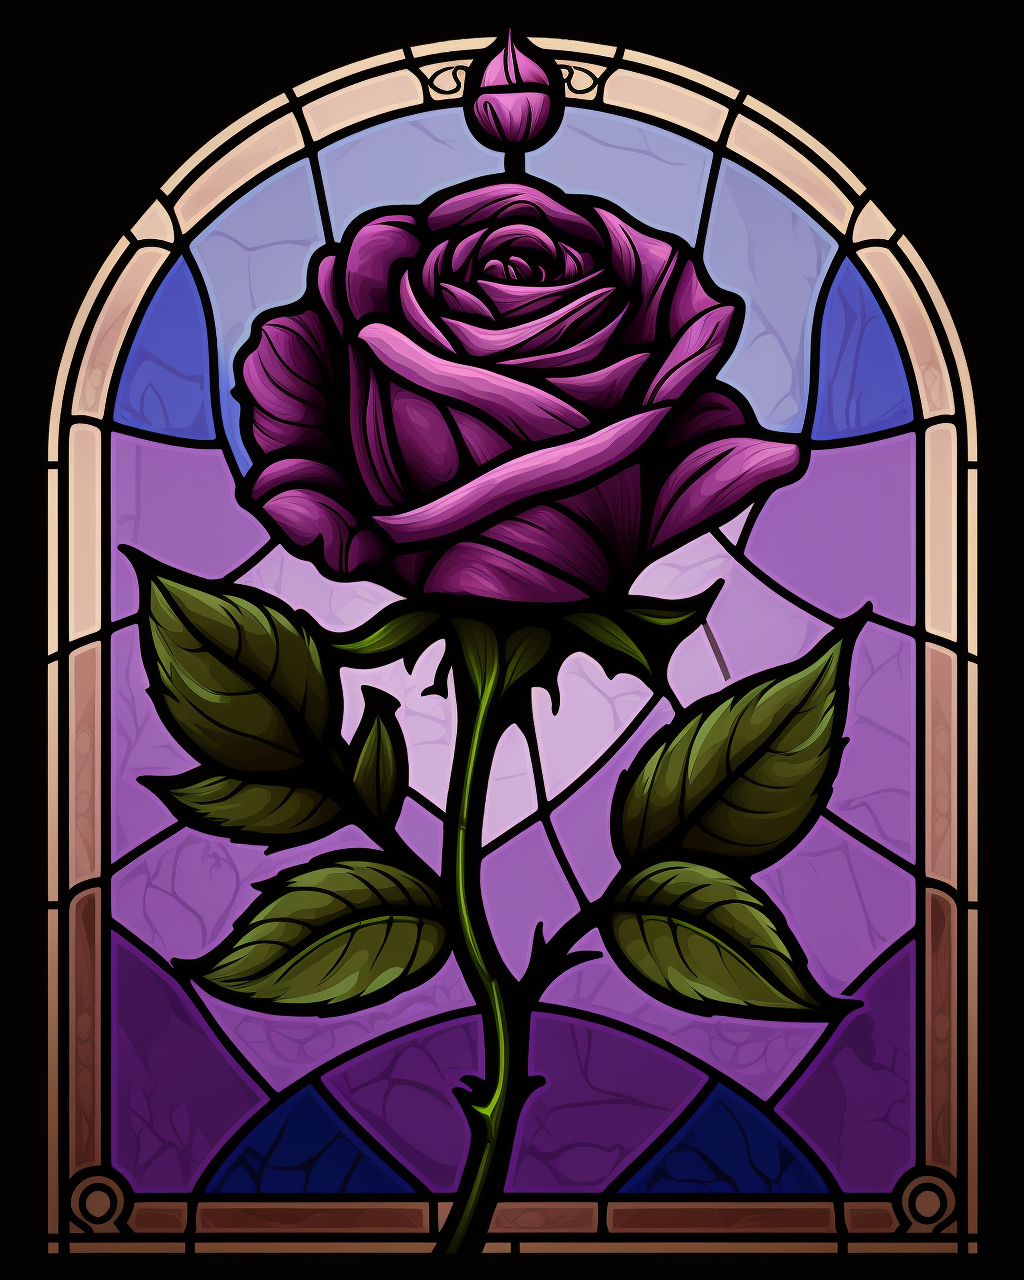 Purple Rose Flowers, 5D Diamond Painting Kits